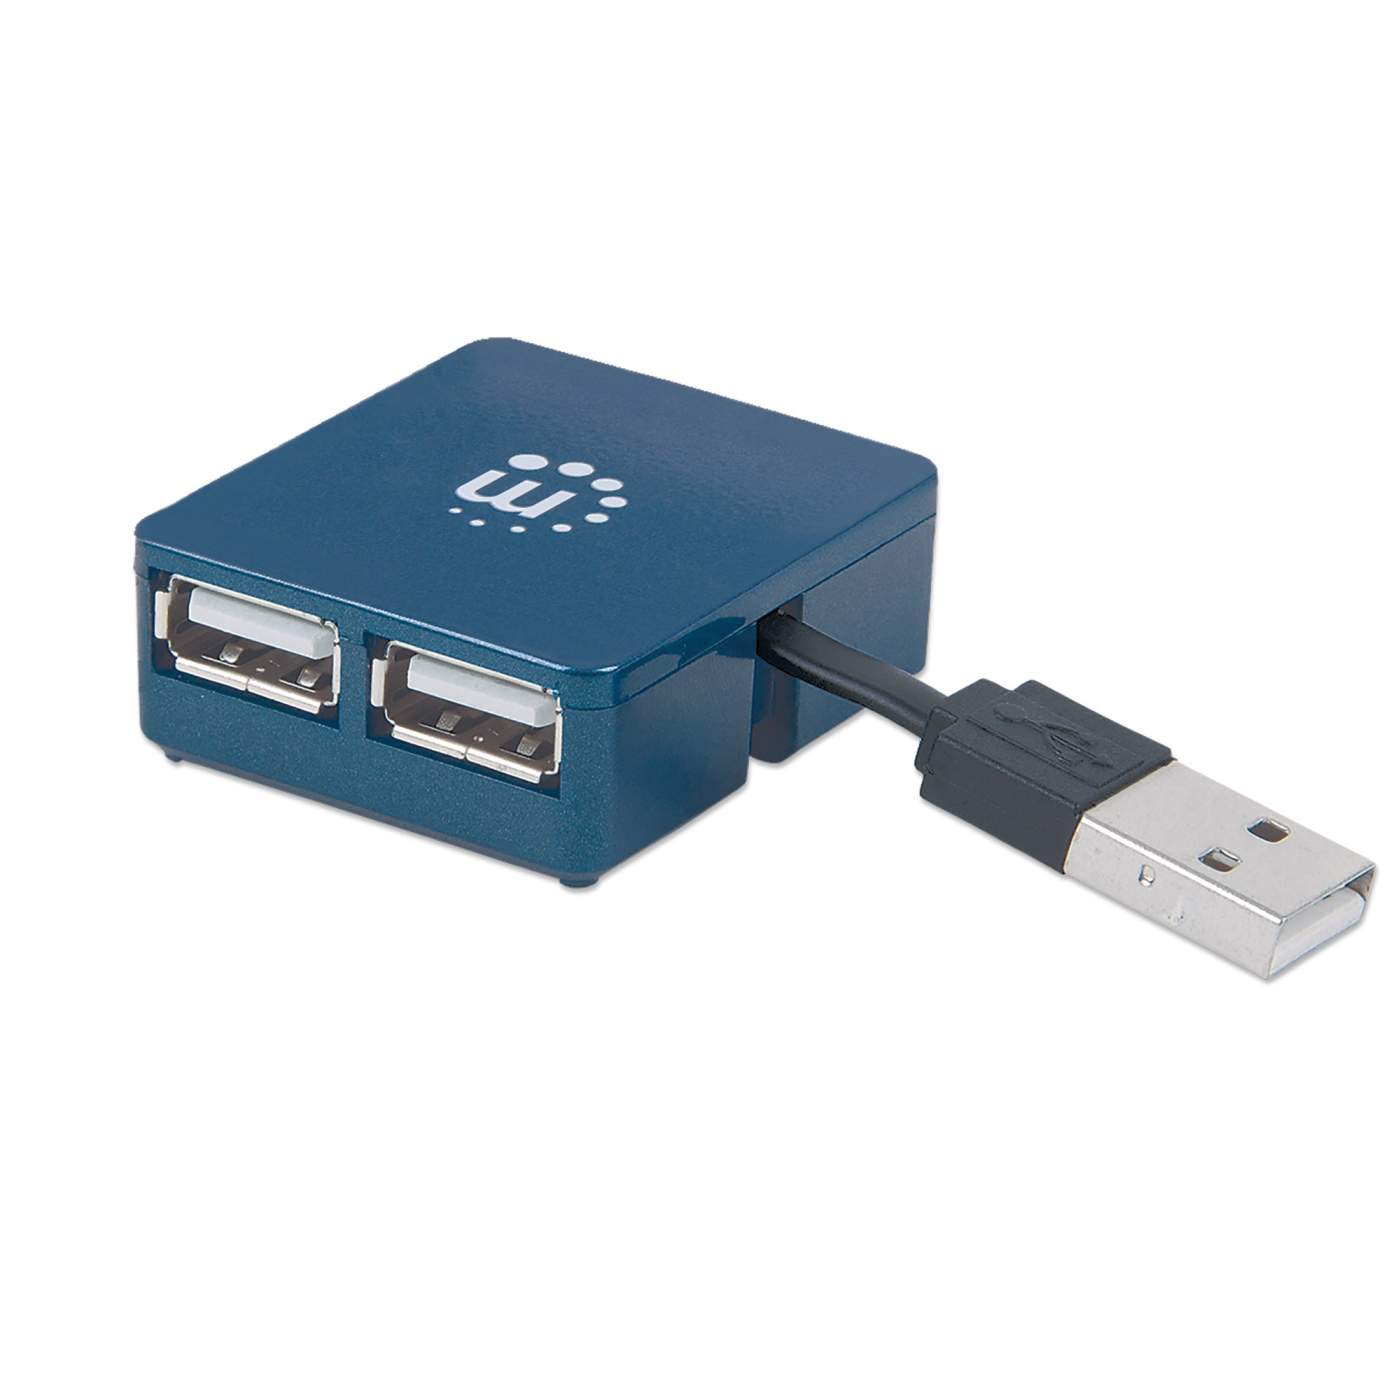 Usb technologies. USB 2.0 Hi-Speed. USB 2.0 Hi-Speed Hub d800. USB 2.0 Hi-Speed 4-Port Hub d800. Синий USB порт что это.